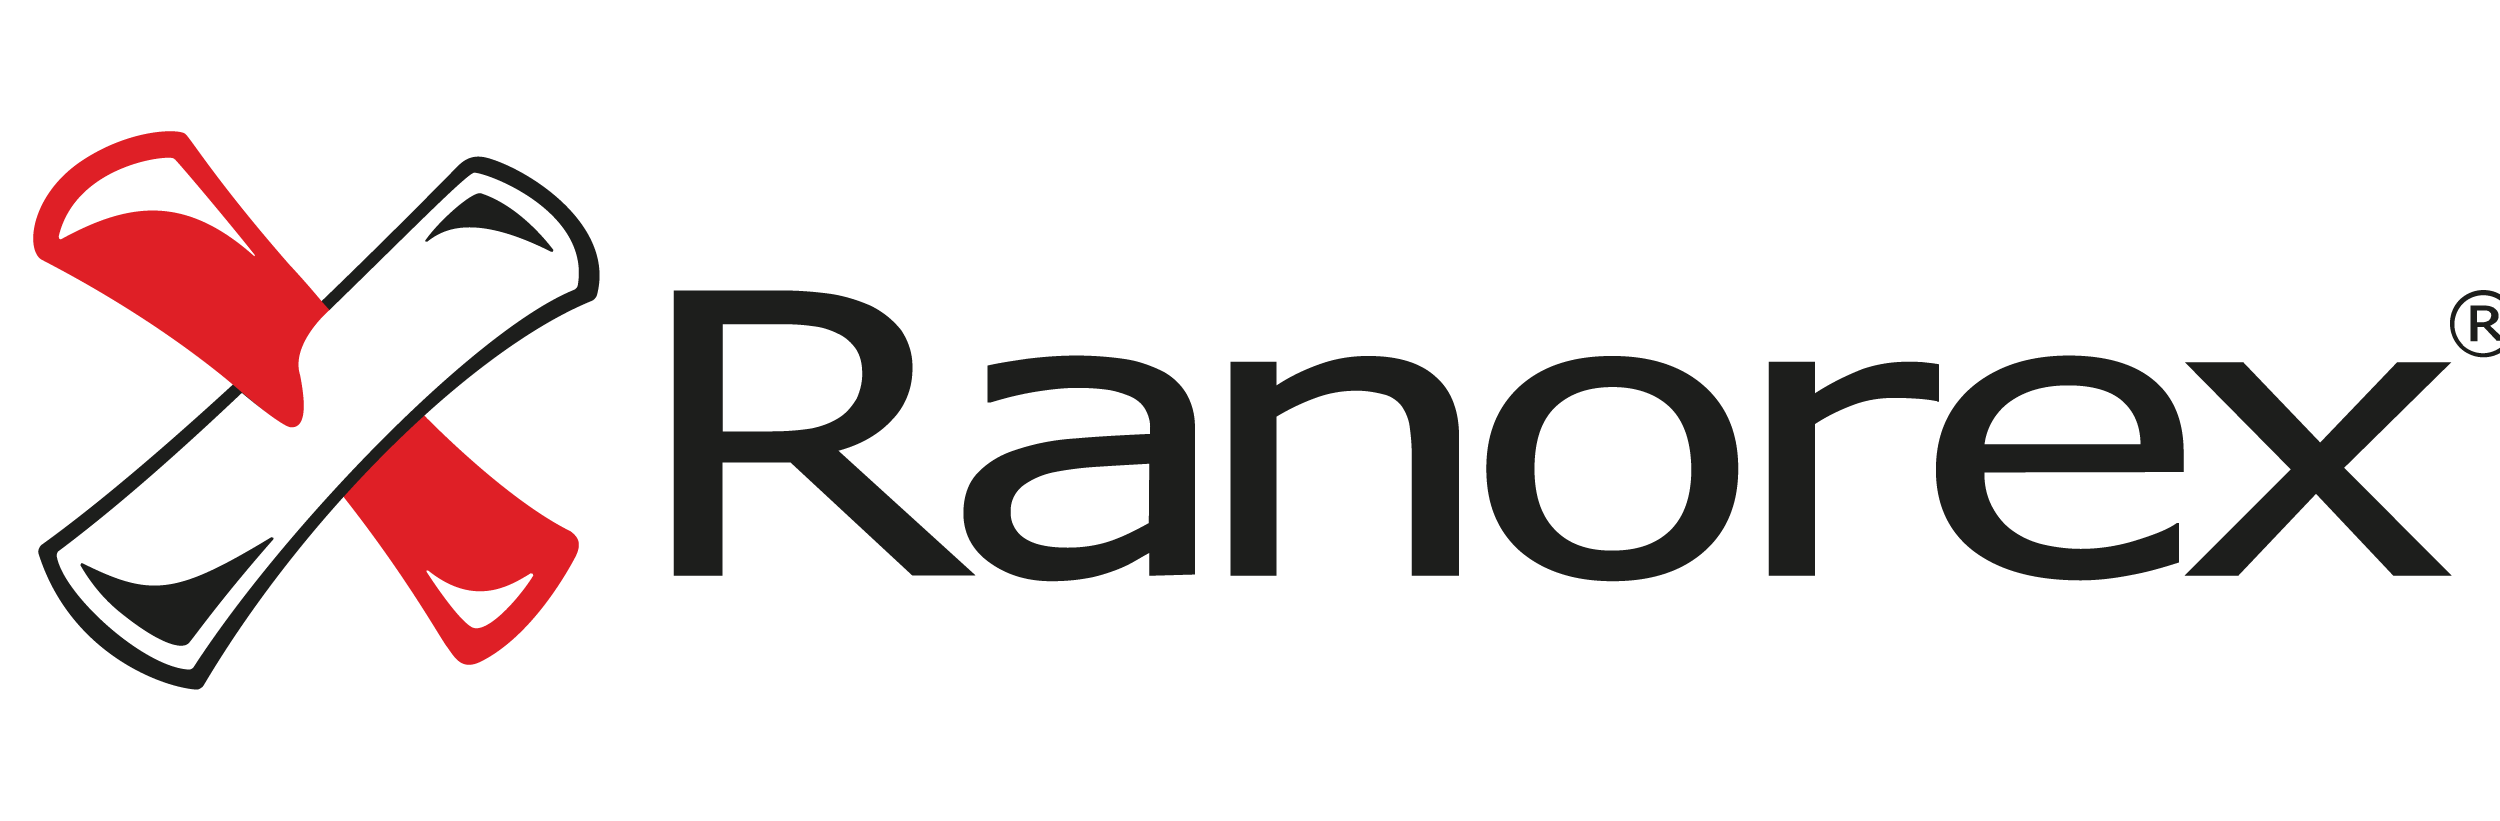 Ranorex 600px 02 Partner Program